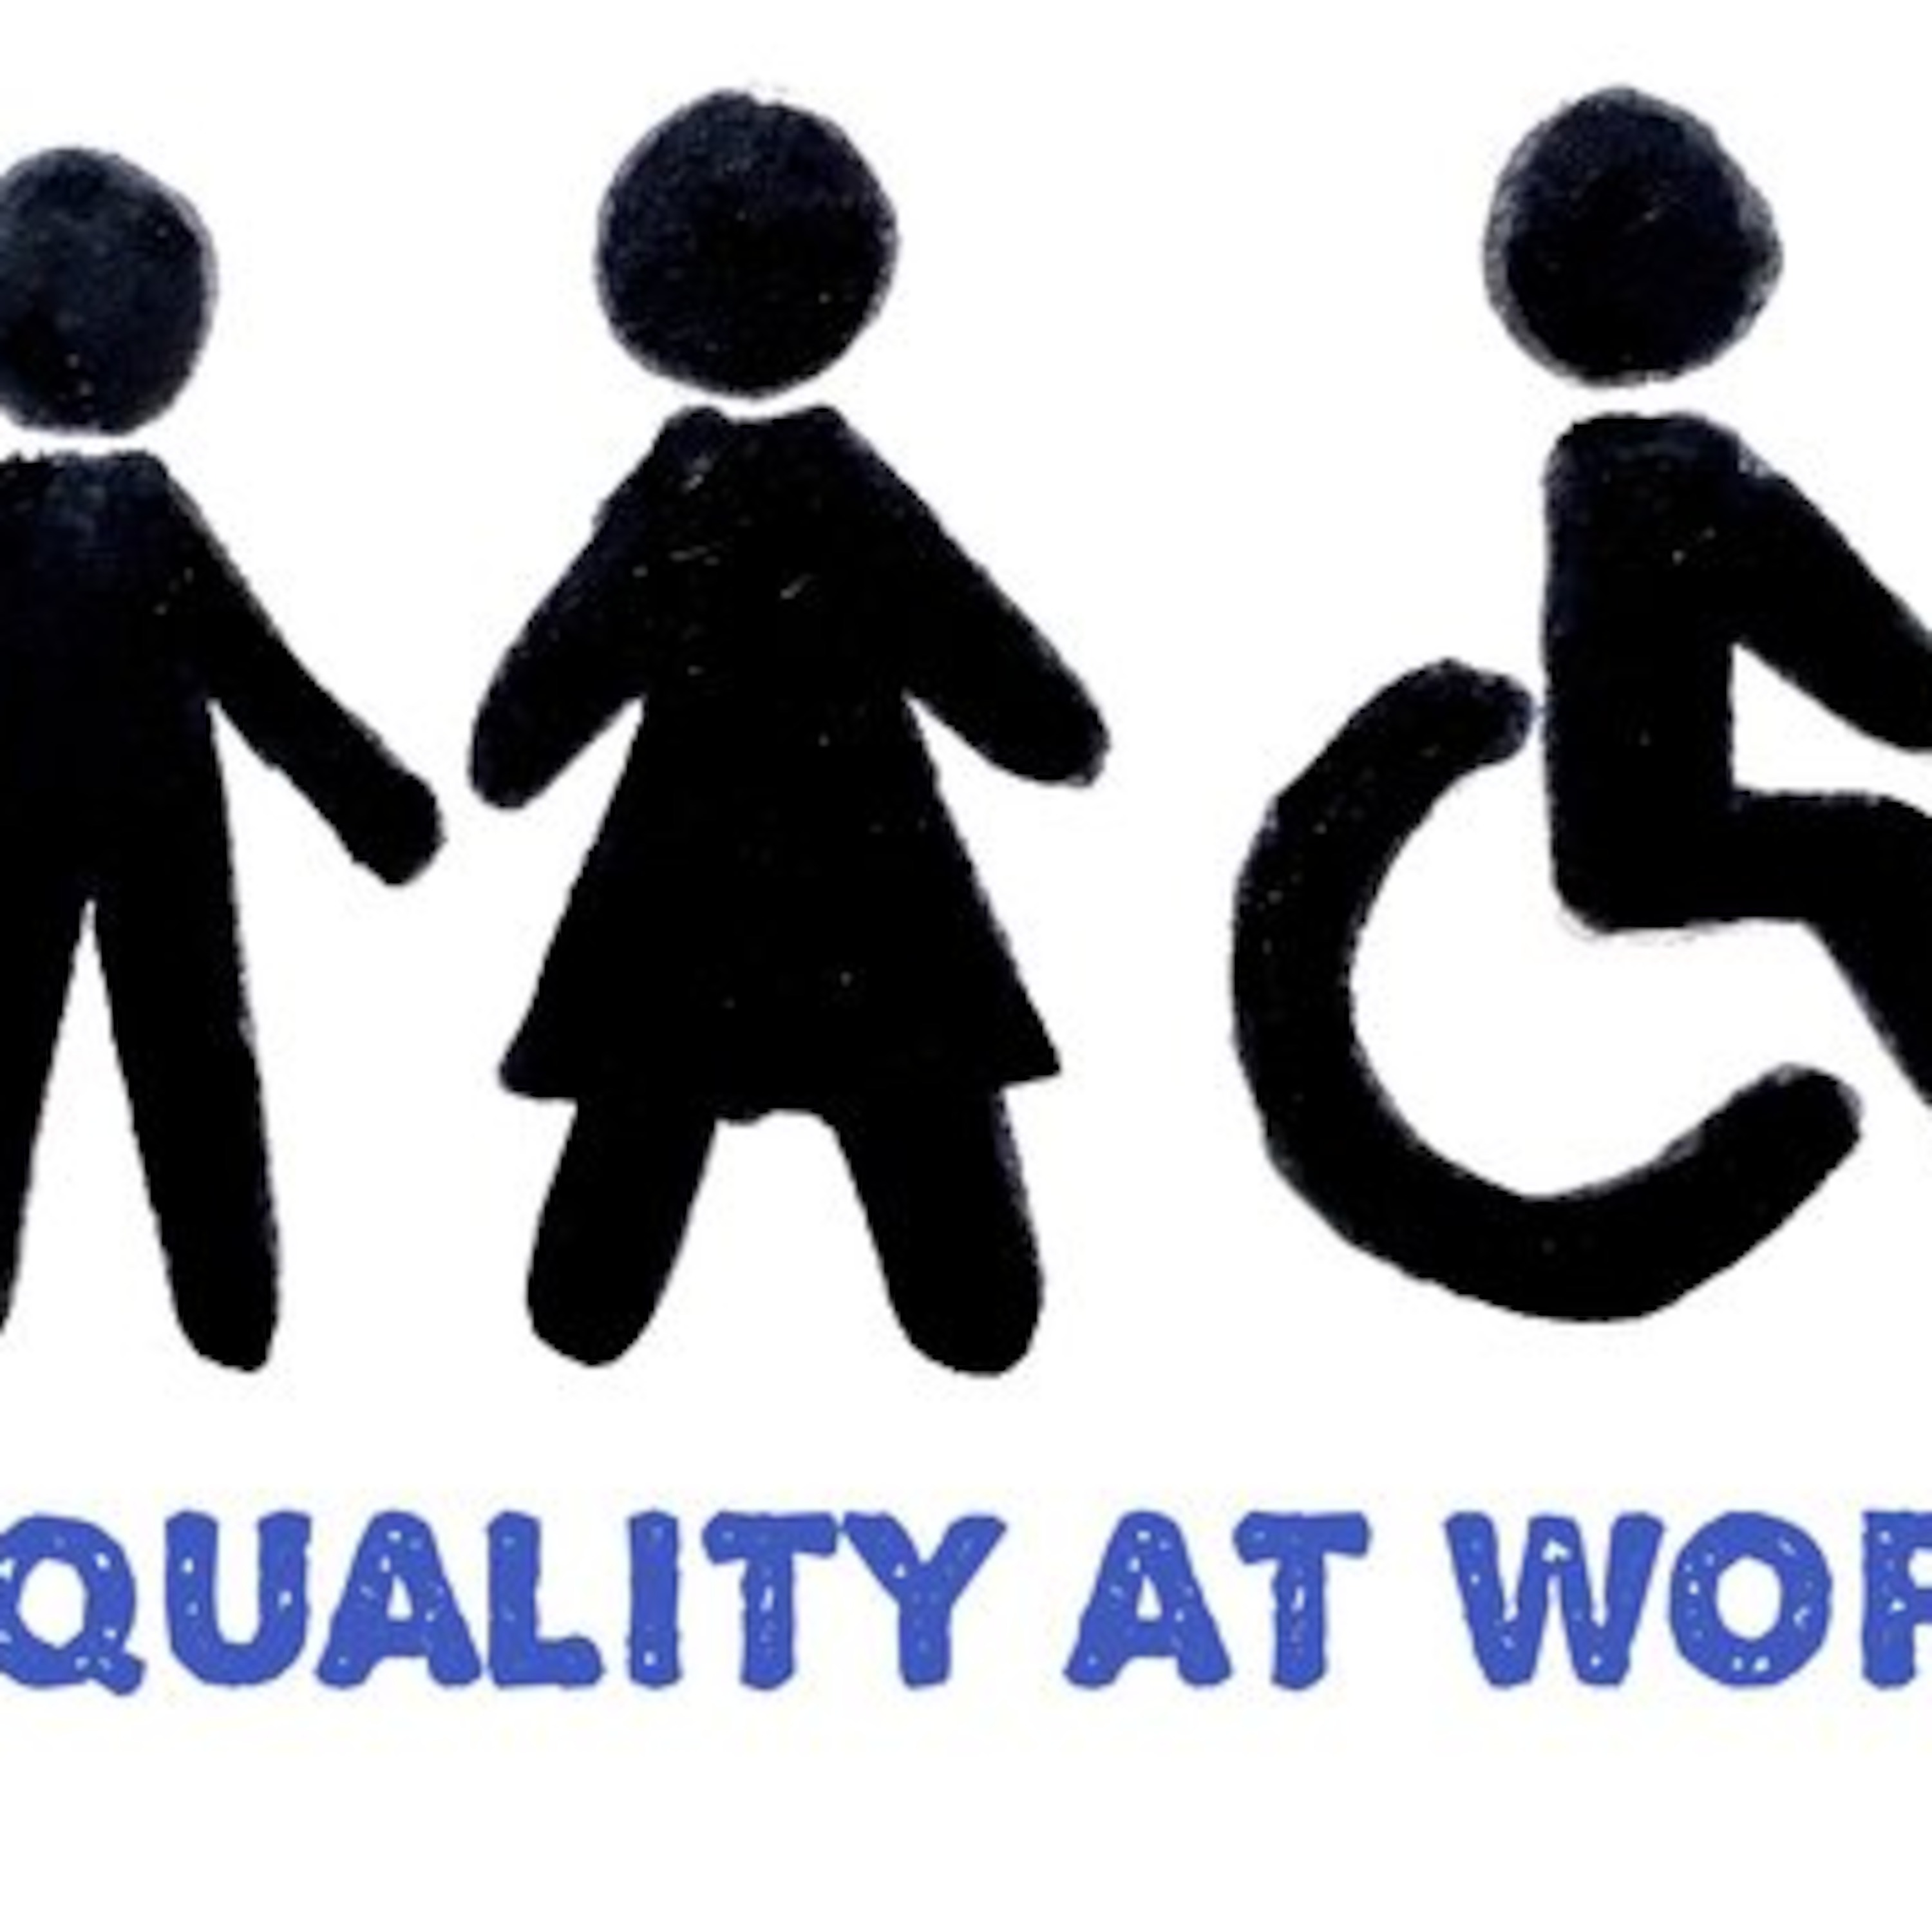 Дискриминация и защита прав. Дискриминация инвалидов. Образы дискриминации инвалидов. Дискриминация инвалидов картинки. Унижение инвалидов.